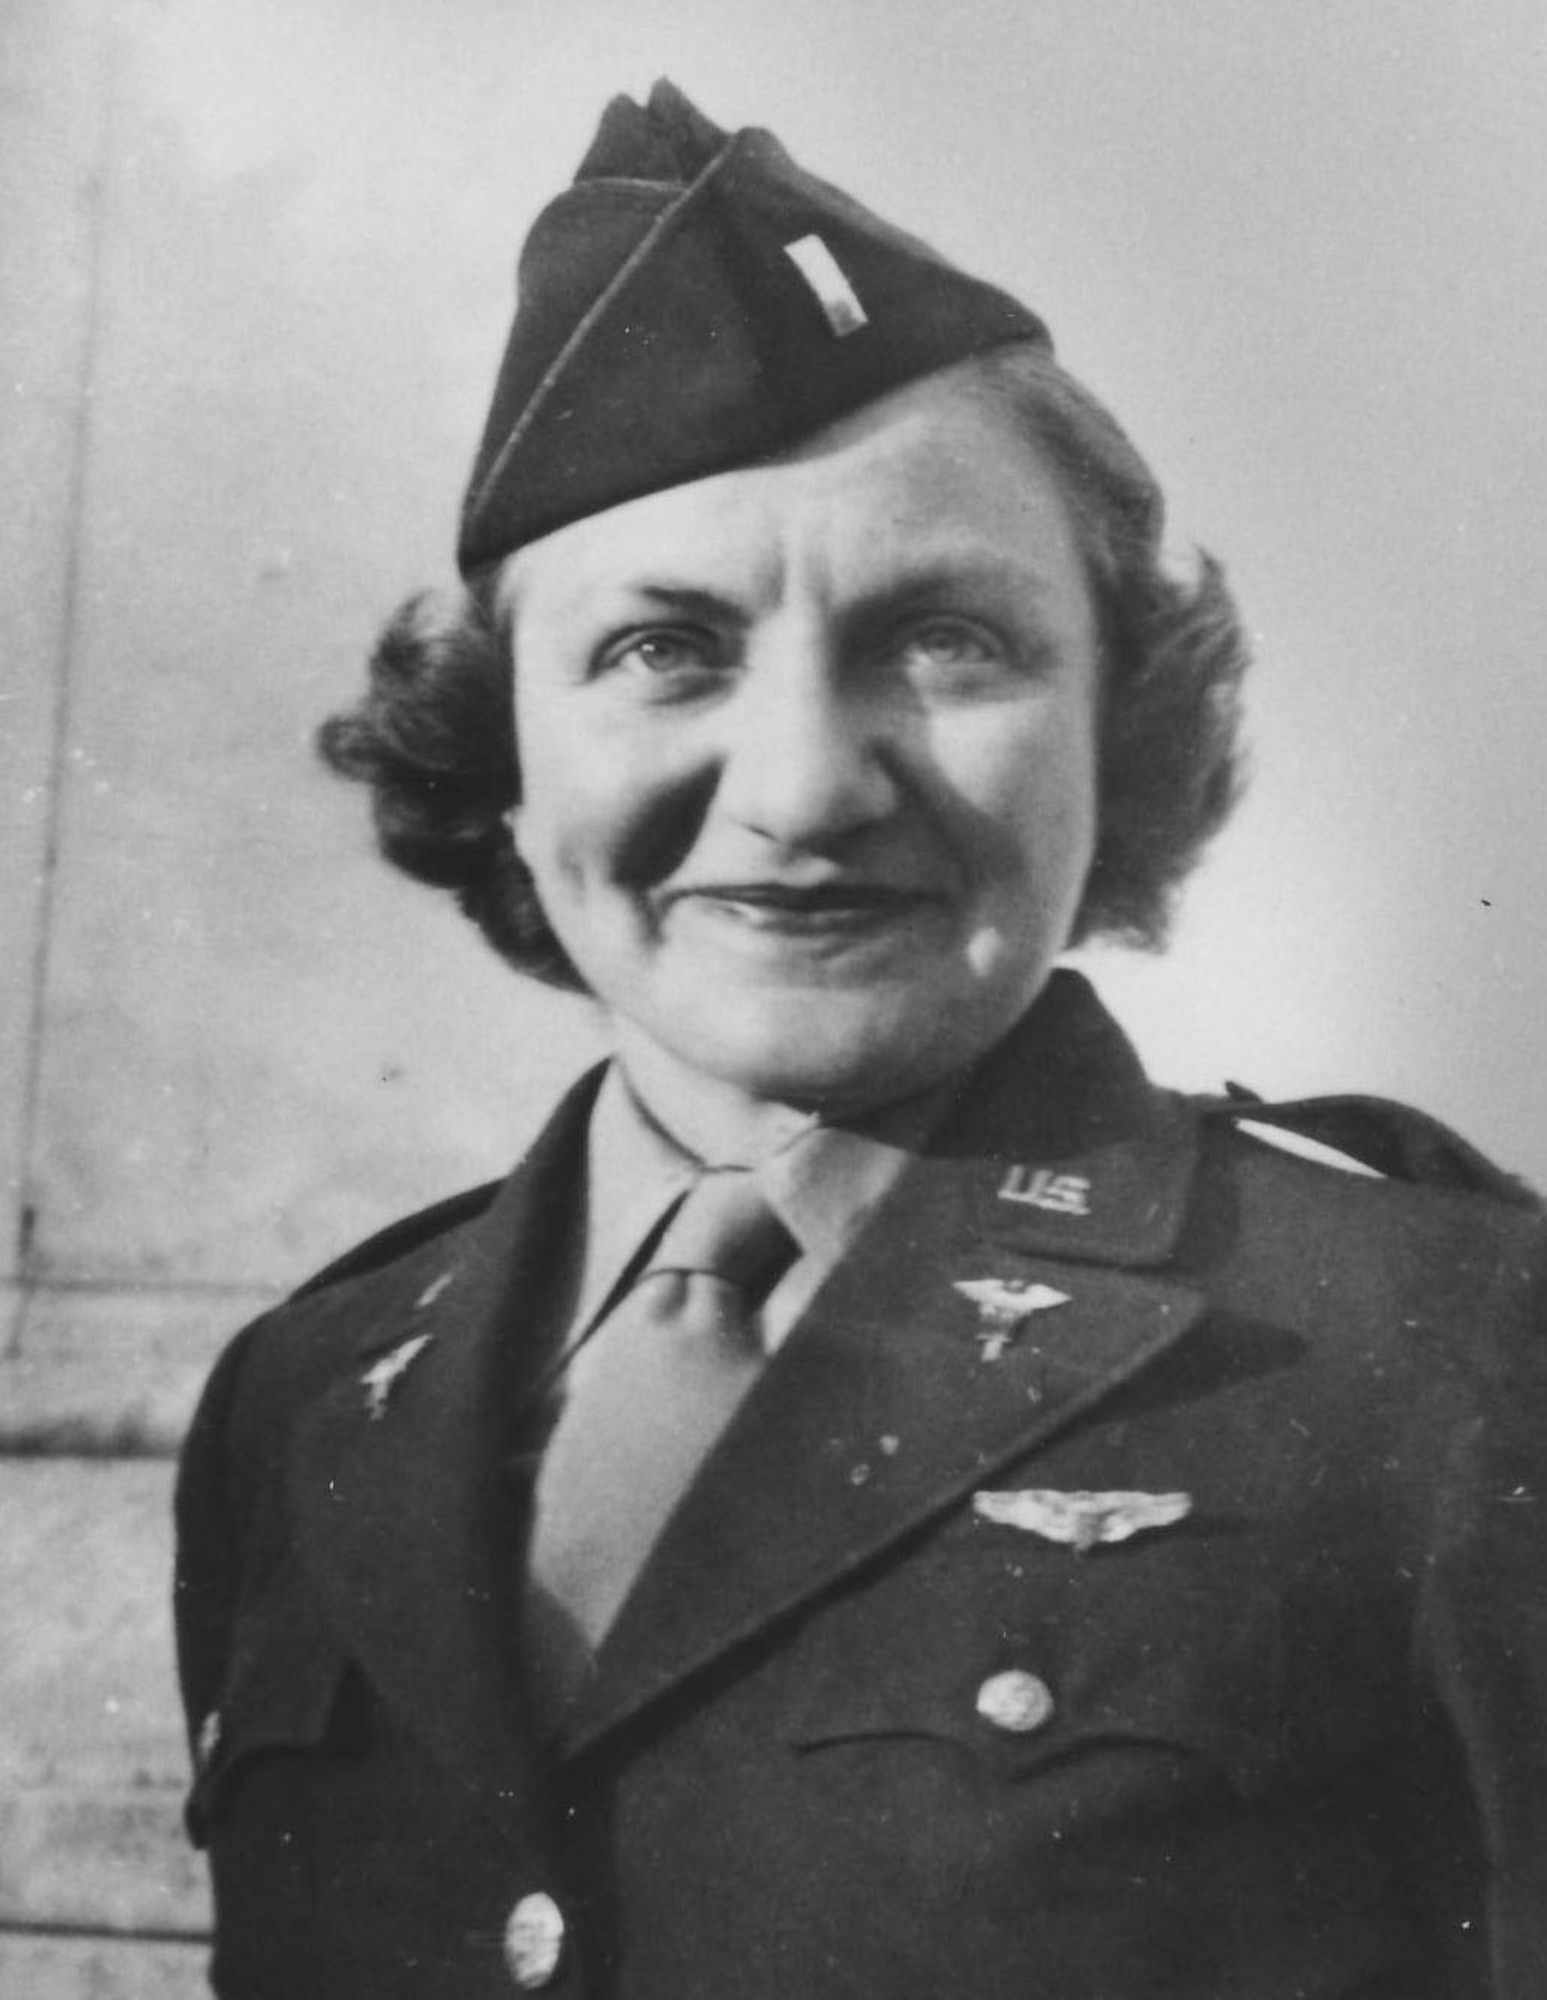 1st Lt. Aleda E. Lutz